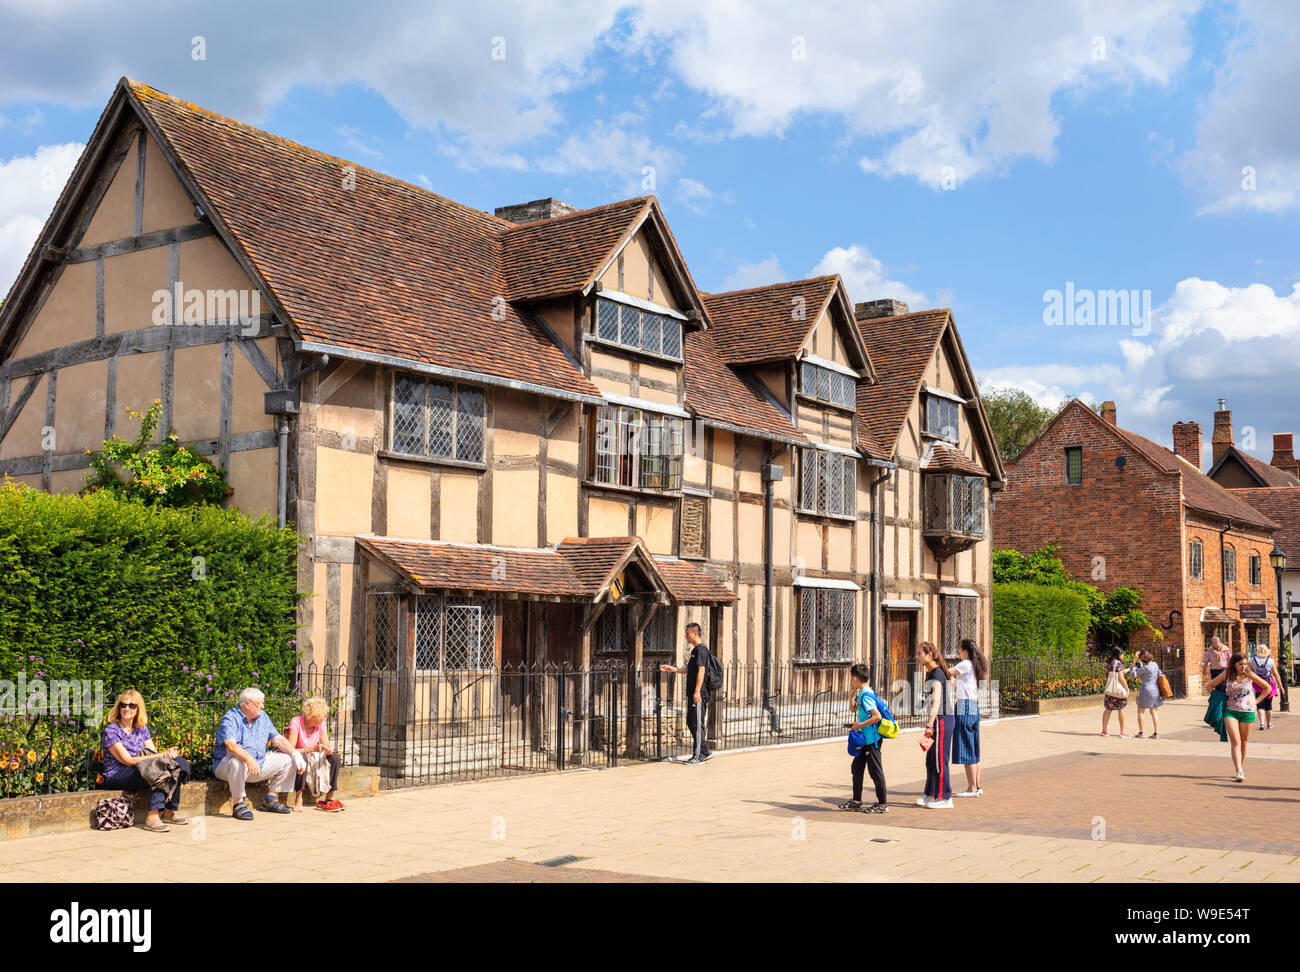 William Shakespeare's birthplace Stratford-upon-Avon William Shakespeare's birthplace Stratford upon Avon Warwickshire England UK GB Europe Stock Photo